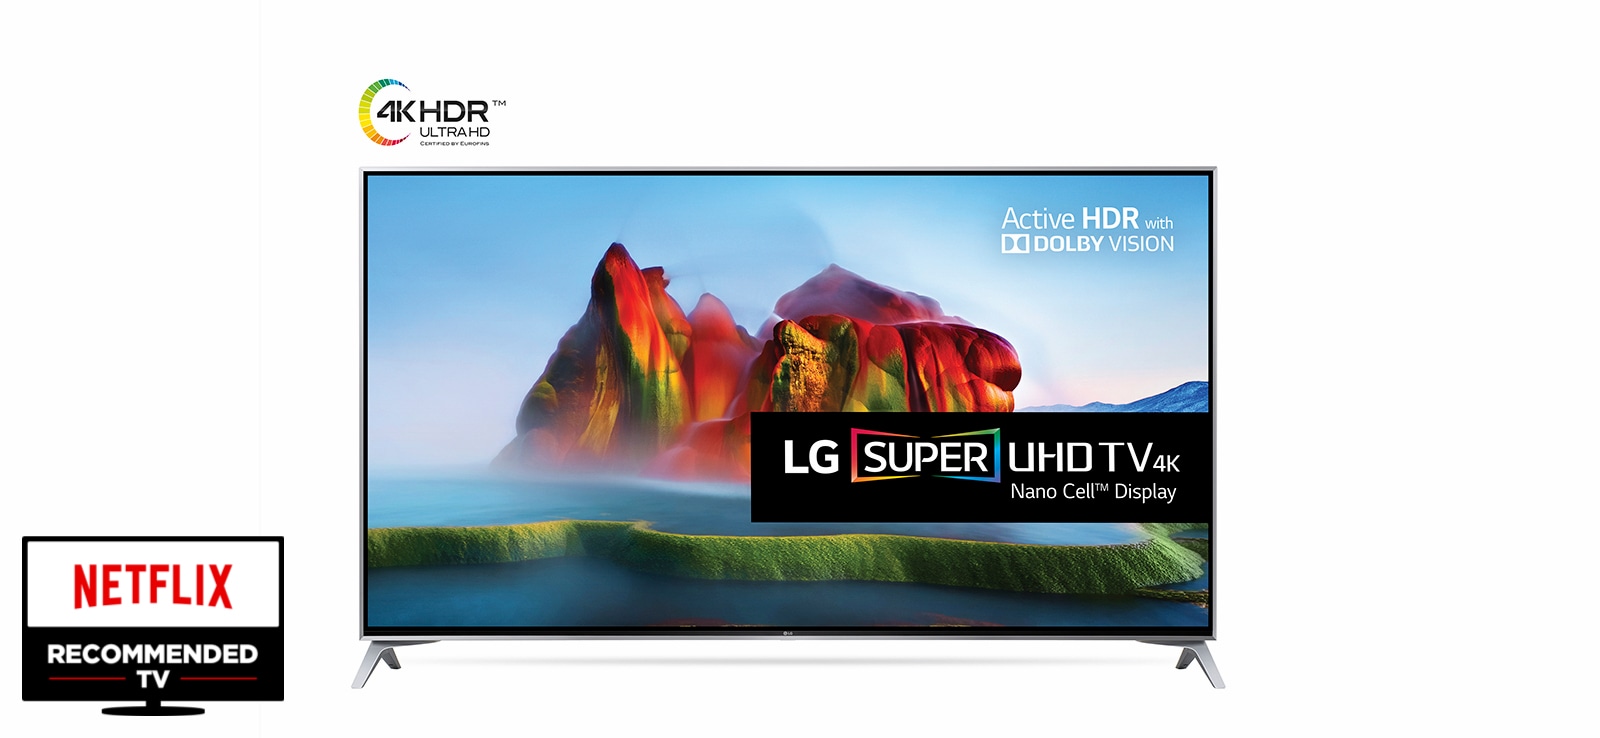 LG 65'' (165 cm) SUPER Ultra HD televizor s IPS 4K Nano Cell™ Display zaslonom, Active HDR - Dolby Vision tehnologijom, webOS 3.5 i harman/kardon®audio sustavom, 65SJ800V